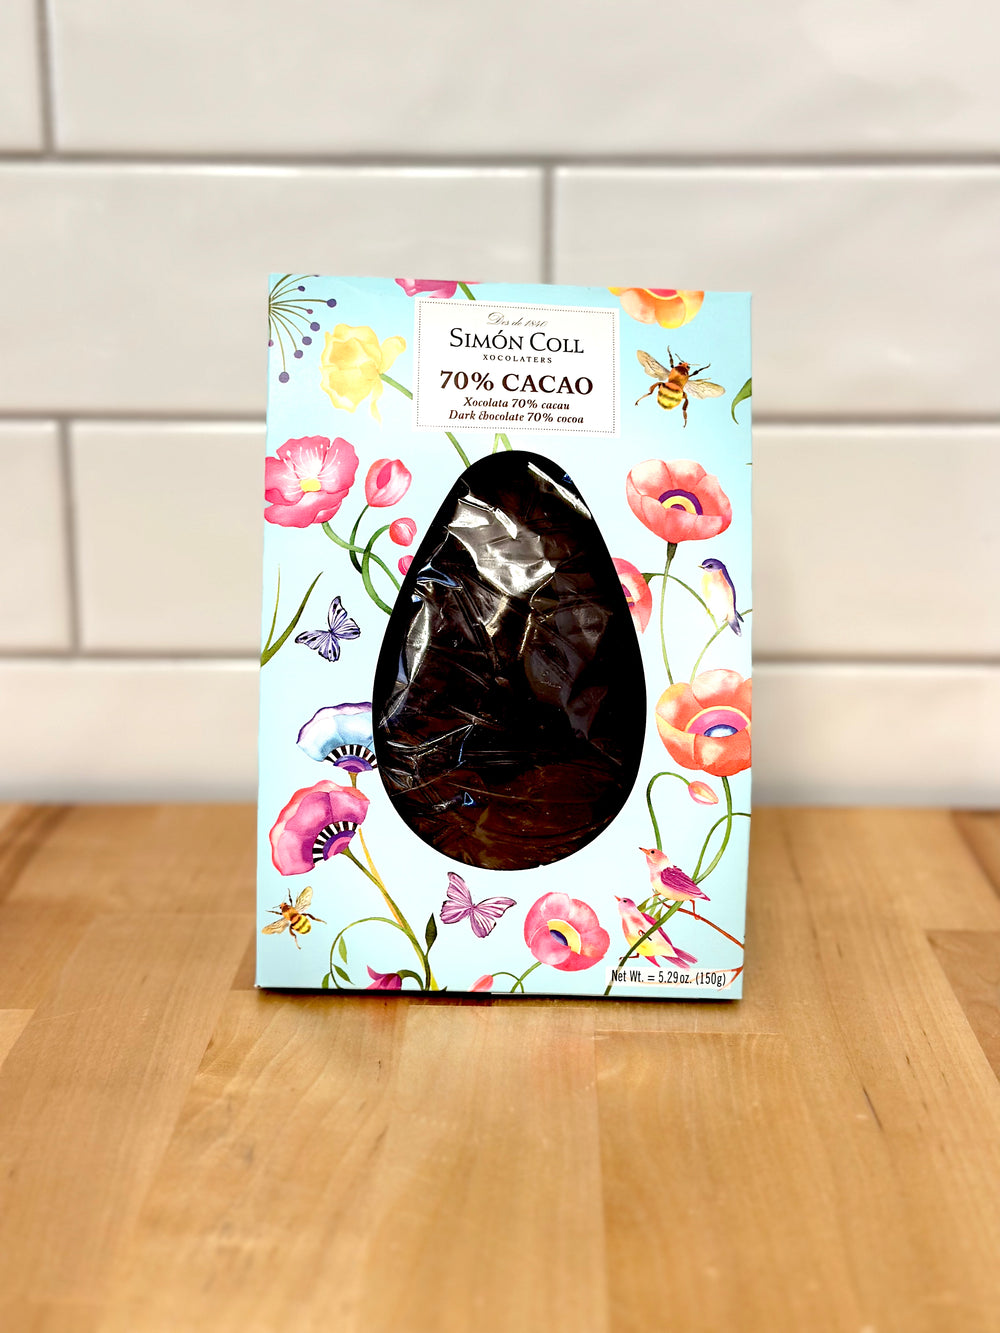 SIMON COLL 70% Dark Chocolate Hollow Egg